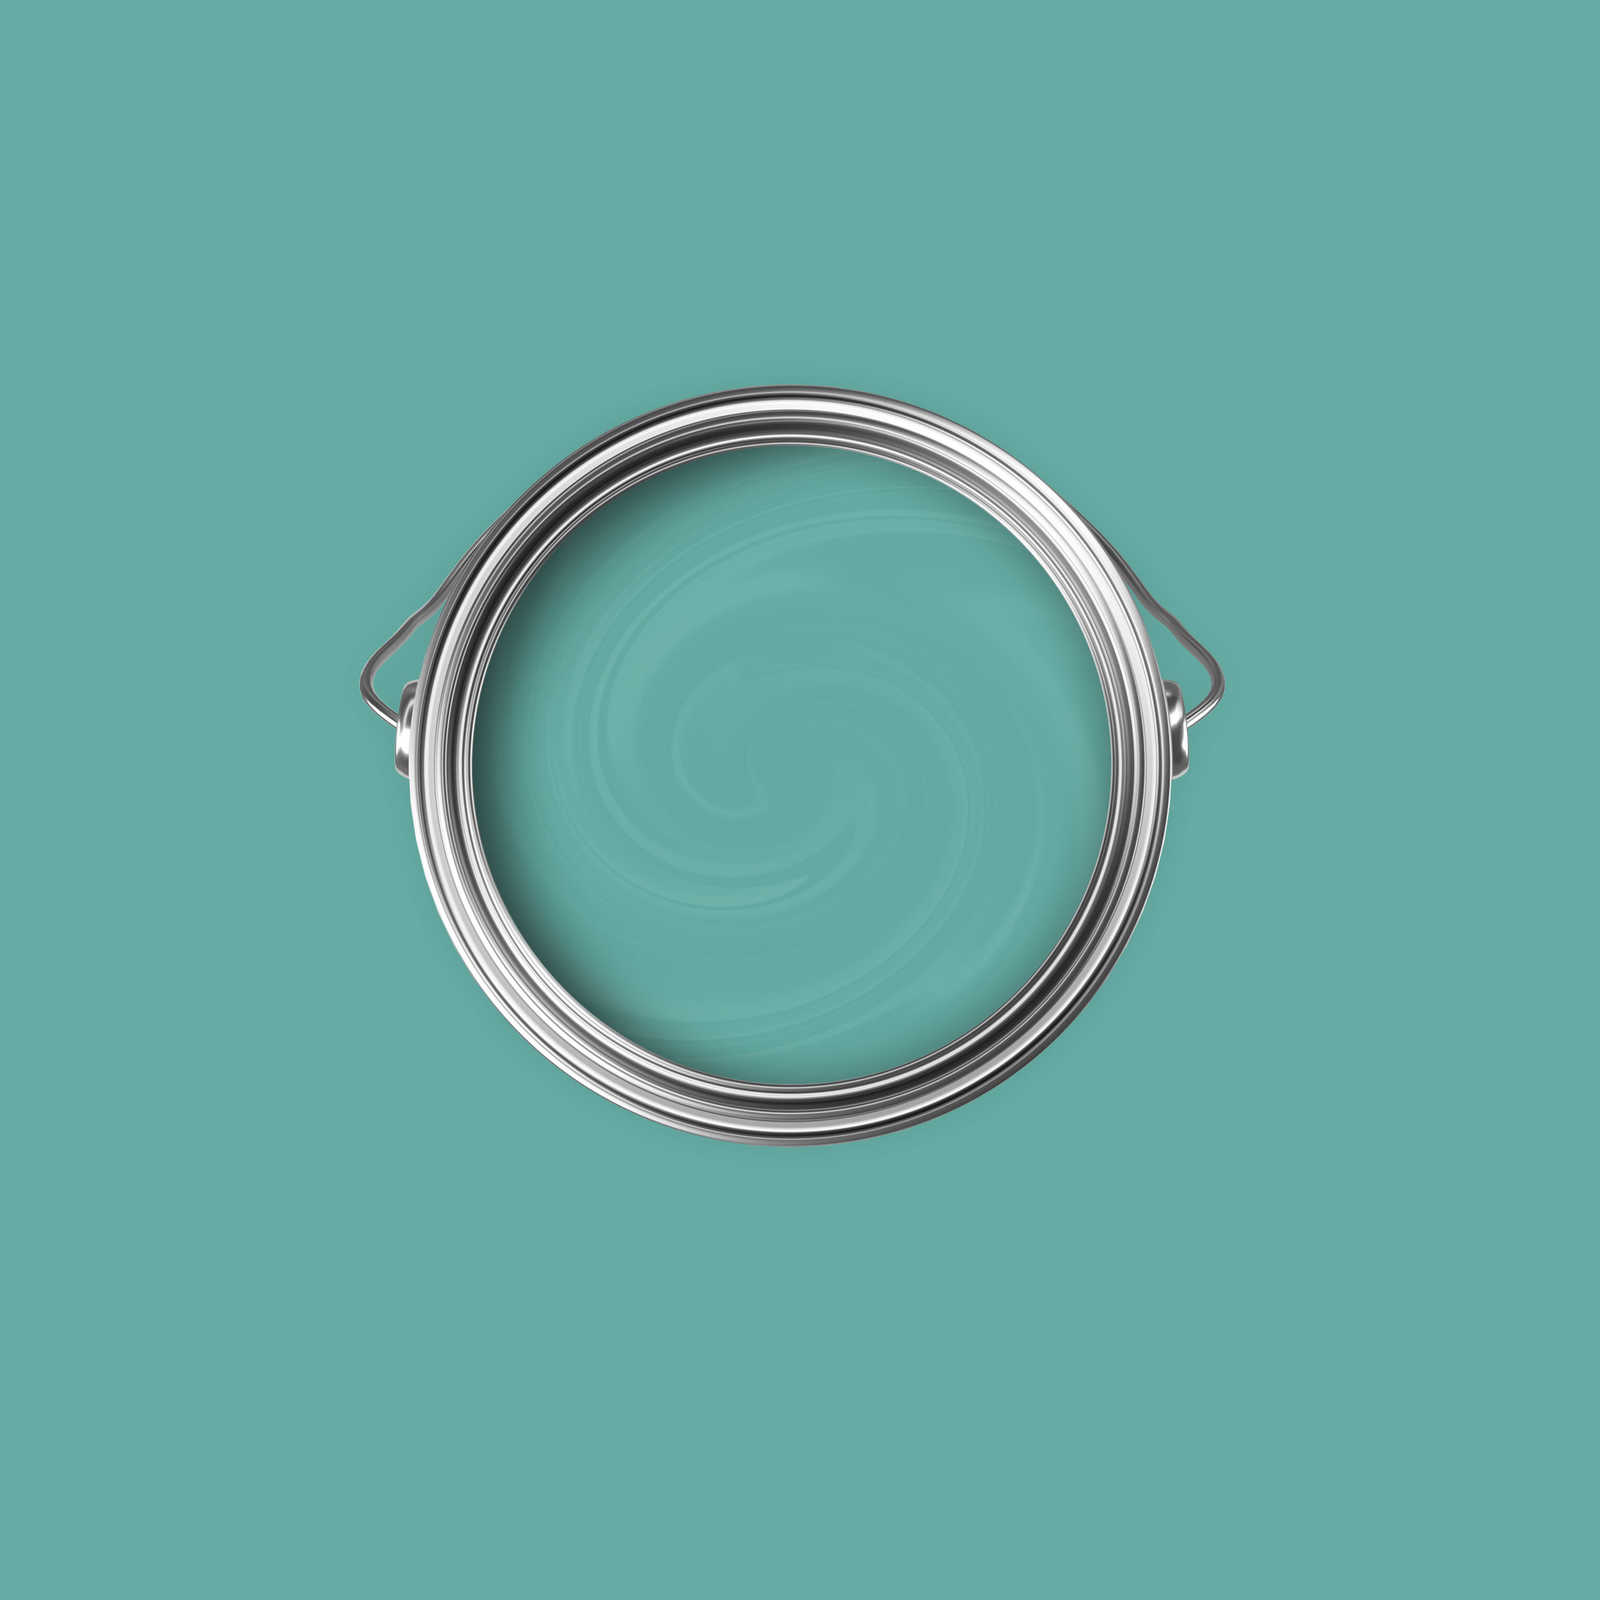             Premium Wall Paint Radiant Mint »Expressive Emerald« NW407 – 2.5 litre
        